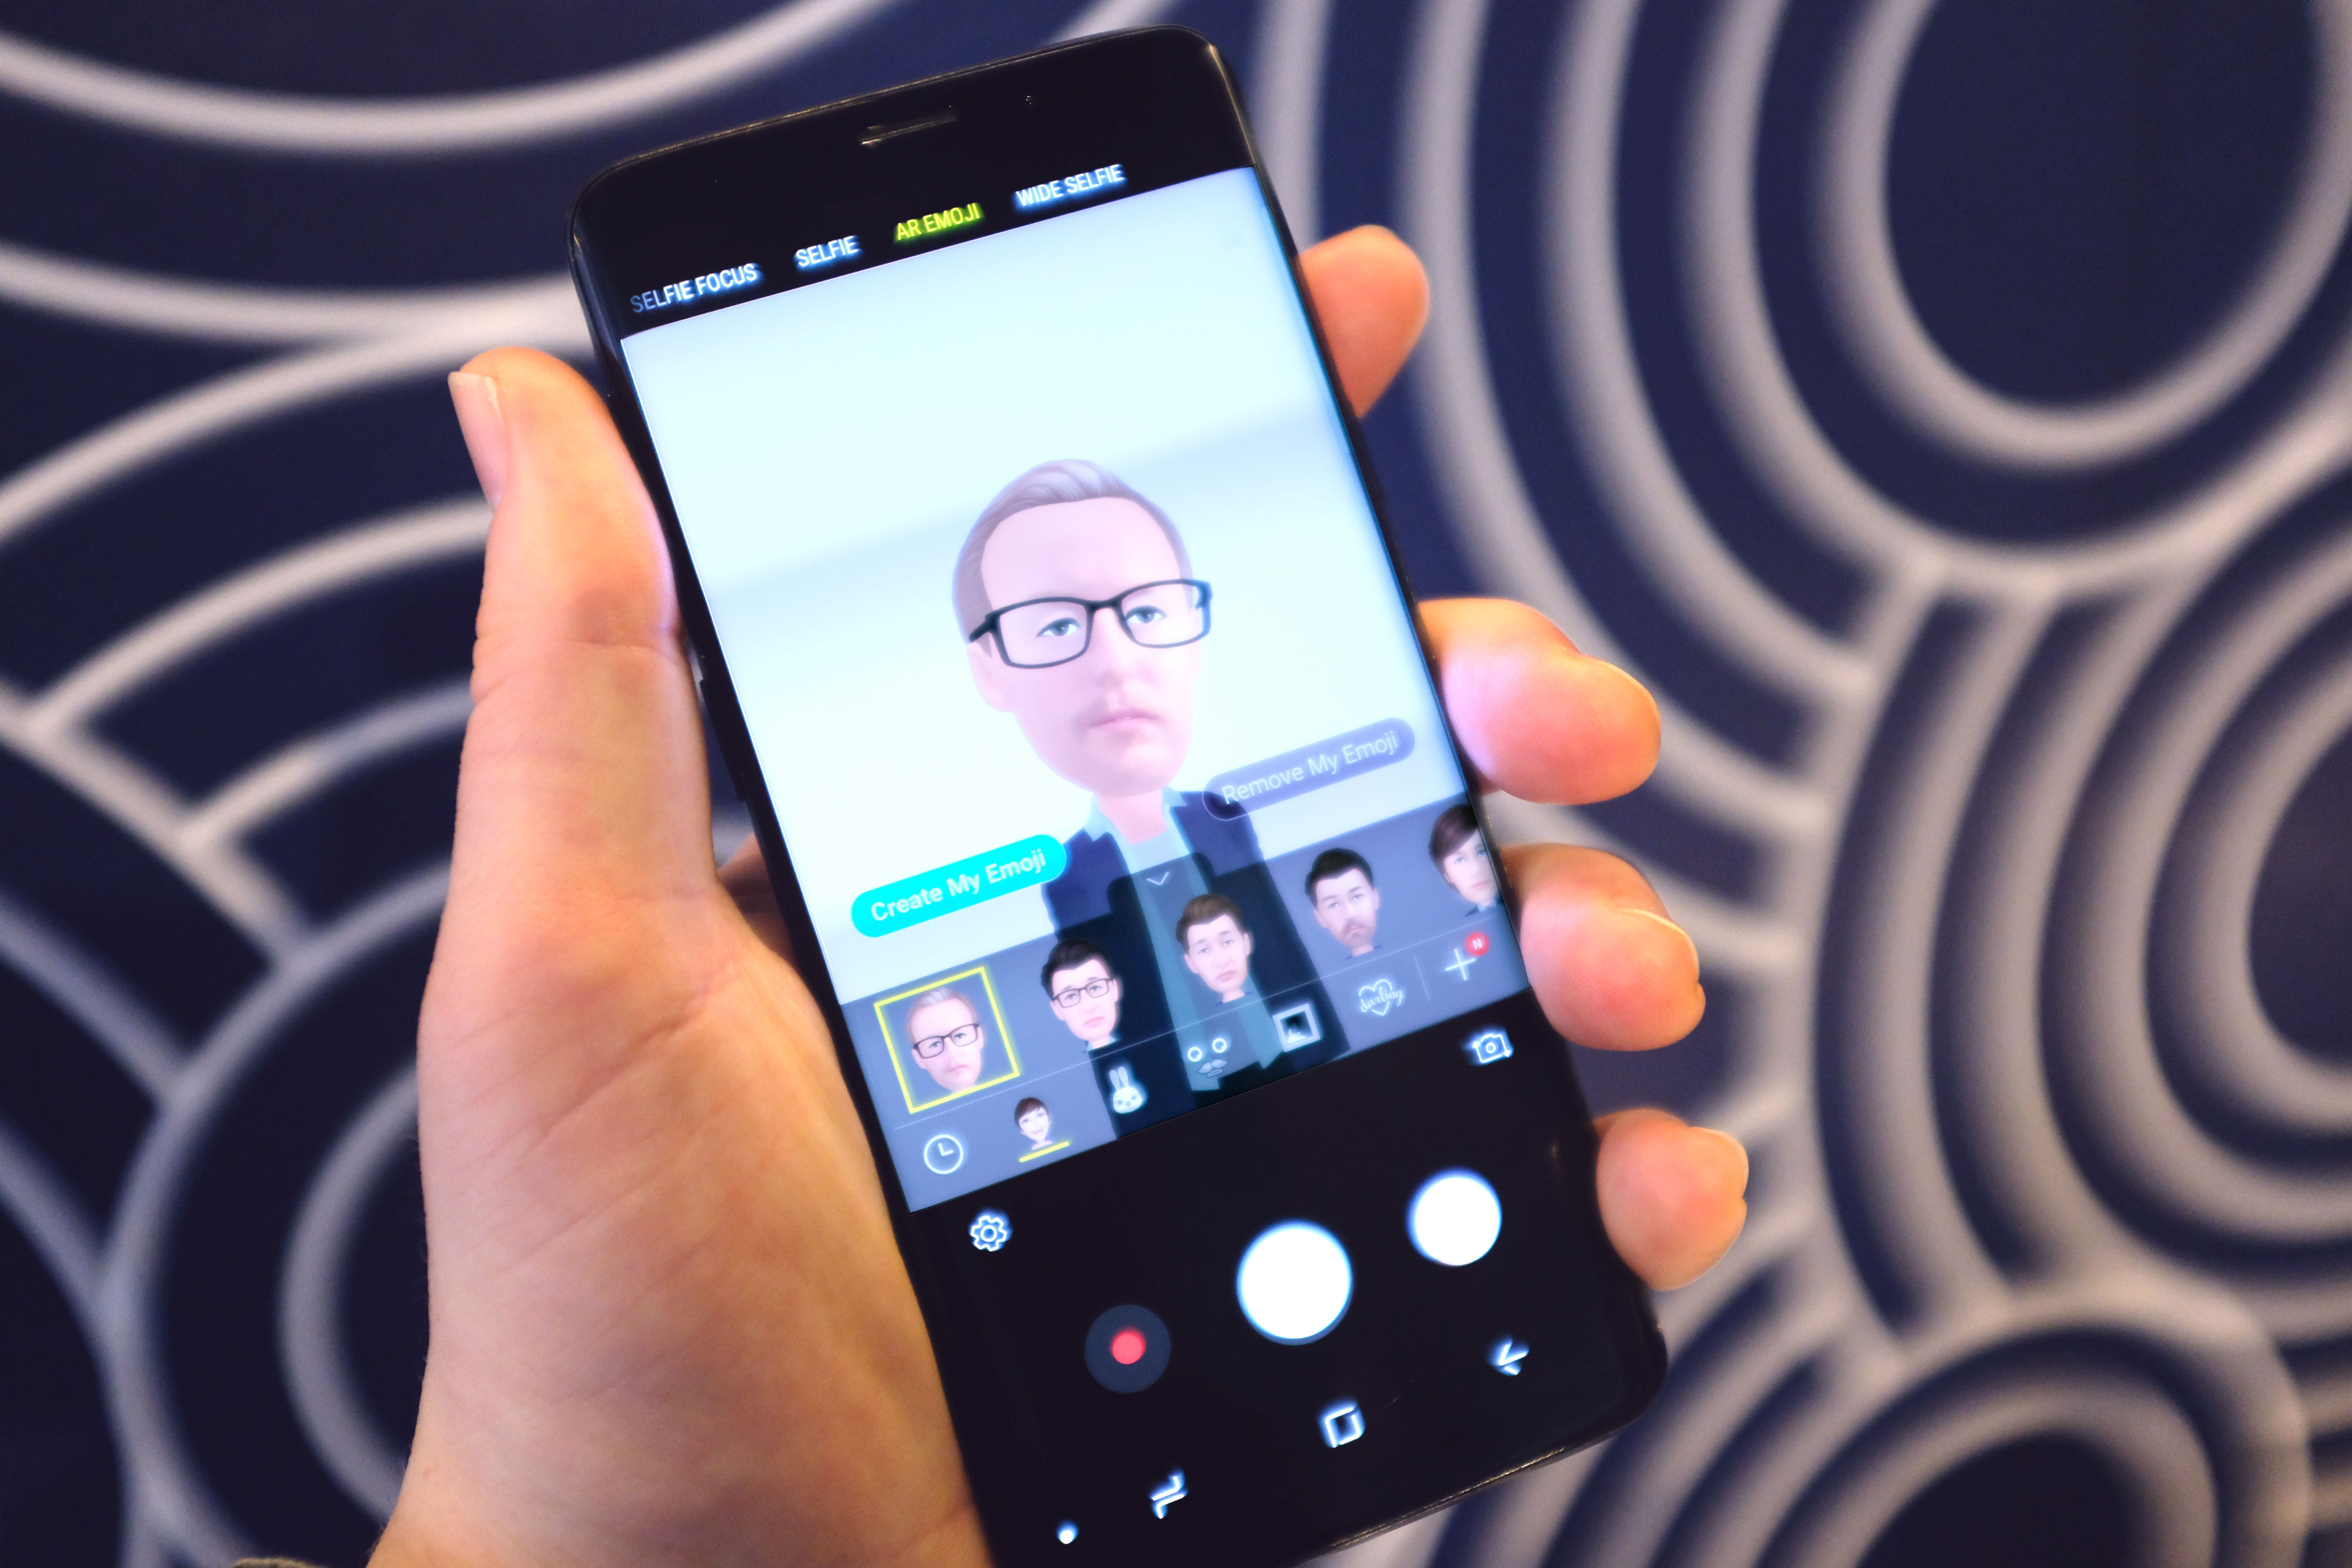 Samsung’s AR Emoji taps creepy avatars and Disney characters to compete with Animoji | TechCrunch